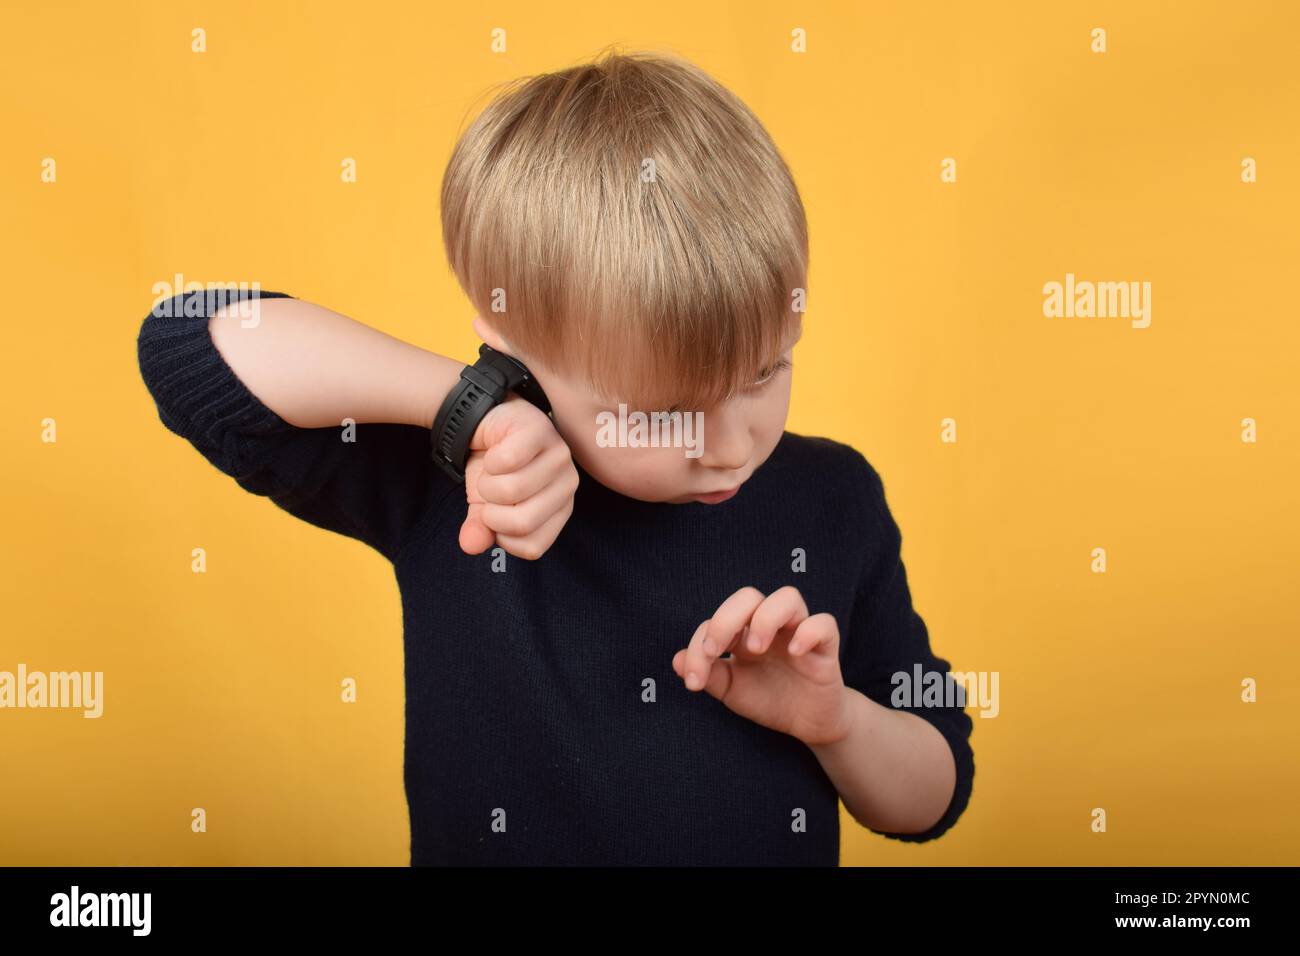 boy child uses a smart watch Stock Photo